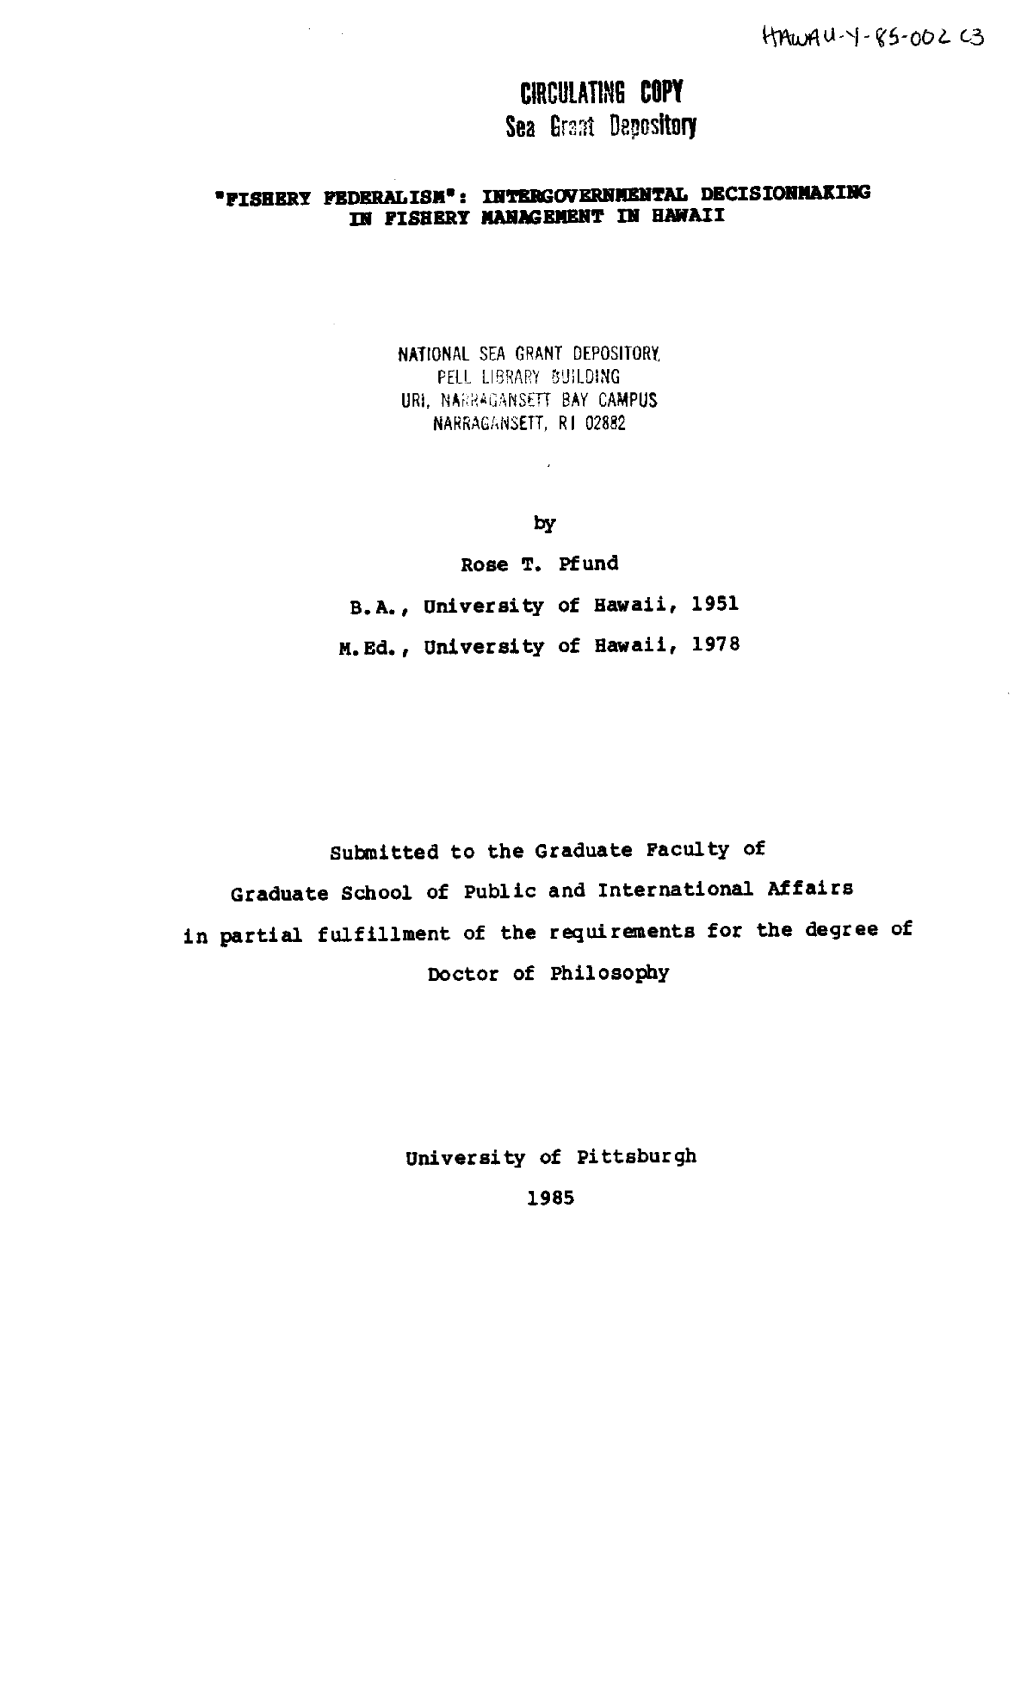 Complete Document / HAWAU-Y-85-002